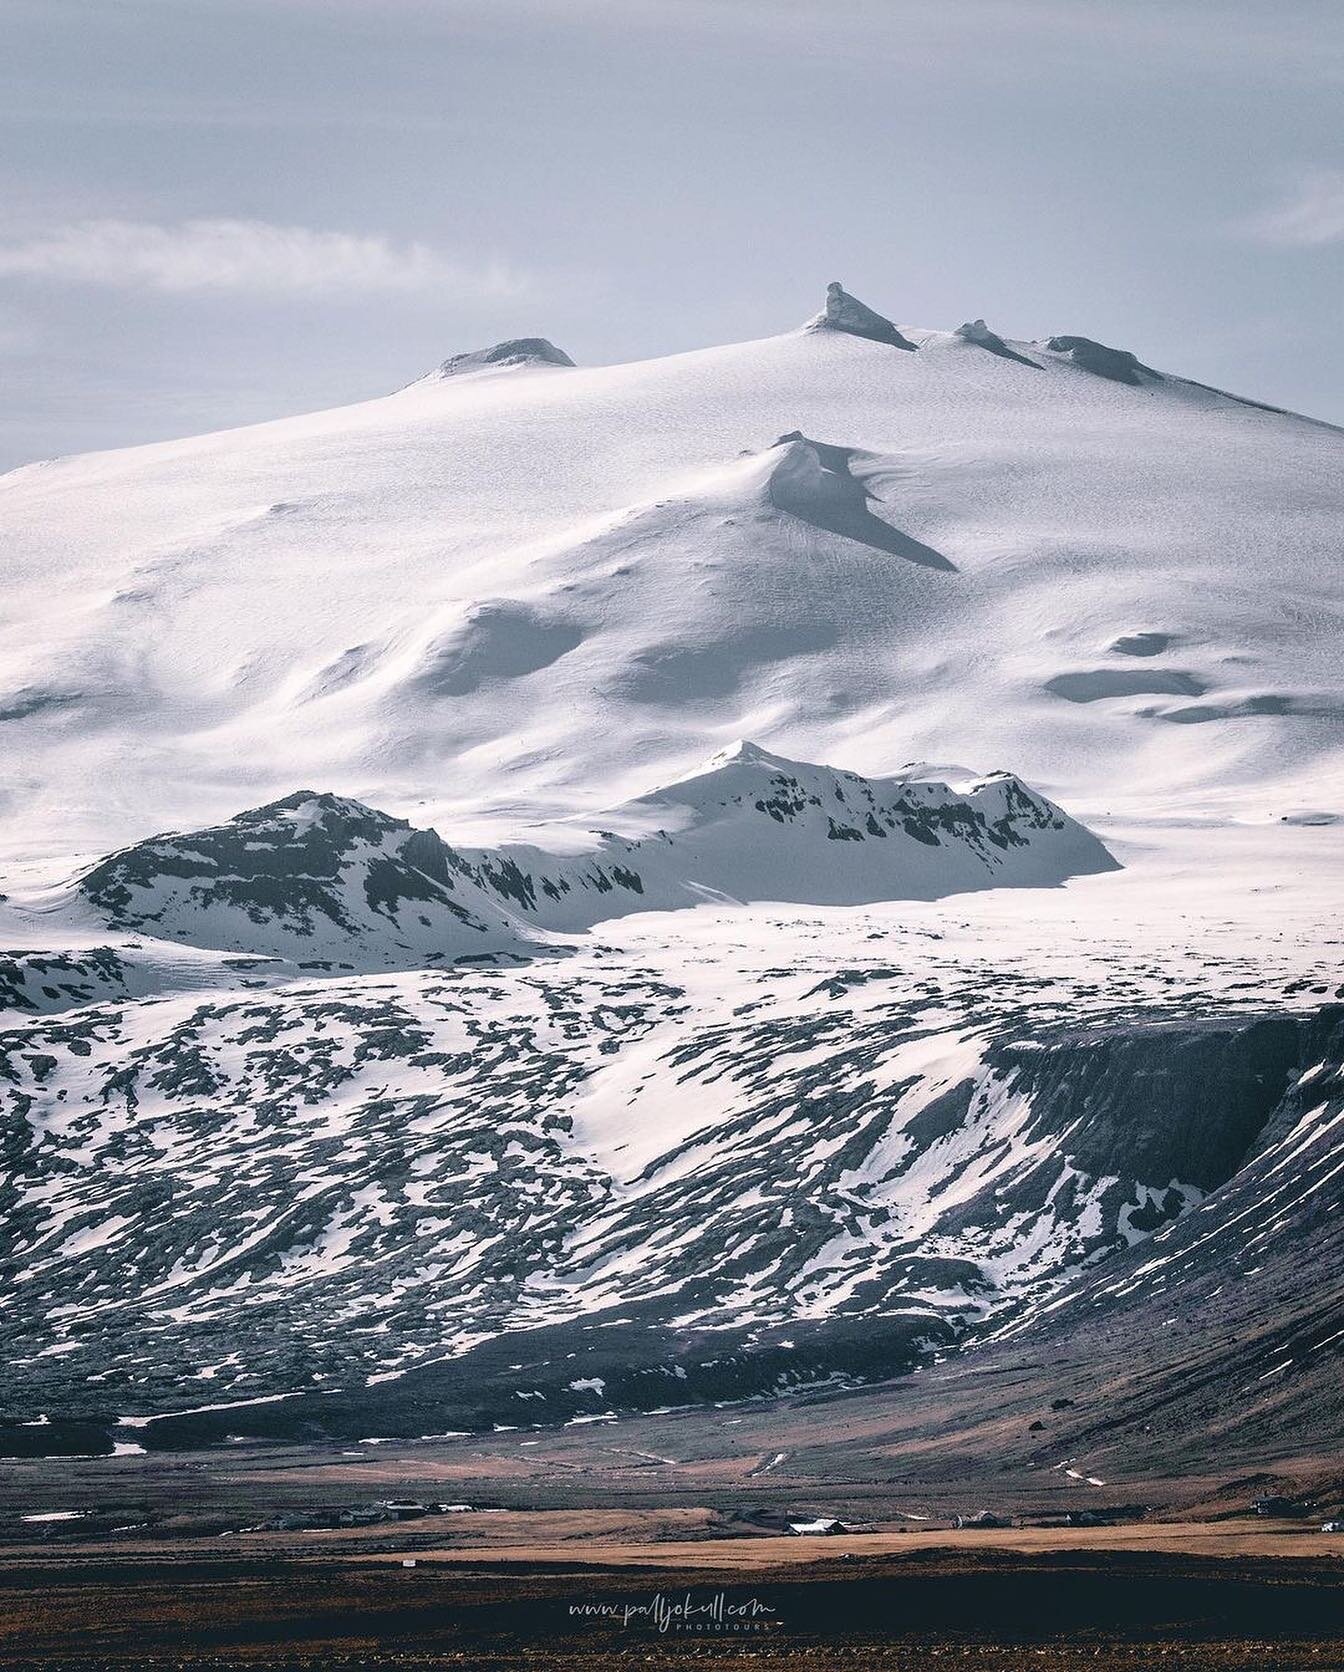 @palljokullphoto One of the old volcanoes in Iceland, which one is this?
&mdash;&mdash;&mdash;&mdash;&mdash;&mdash;&mdash;&mdash;&mdash;&mdash;&mdash;&mdash;&mdash;&mdash;&mdash;&mdash;&mdash;&mdash;&mdash;&mdash;-
📸 by: @palljokullphoto
&mdash;&mda